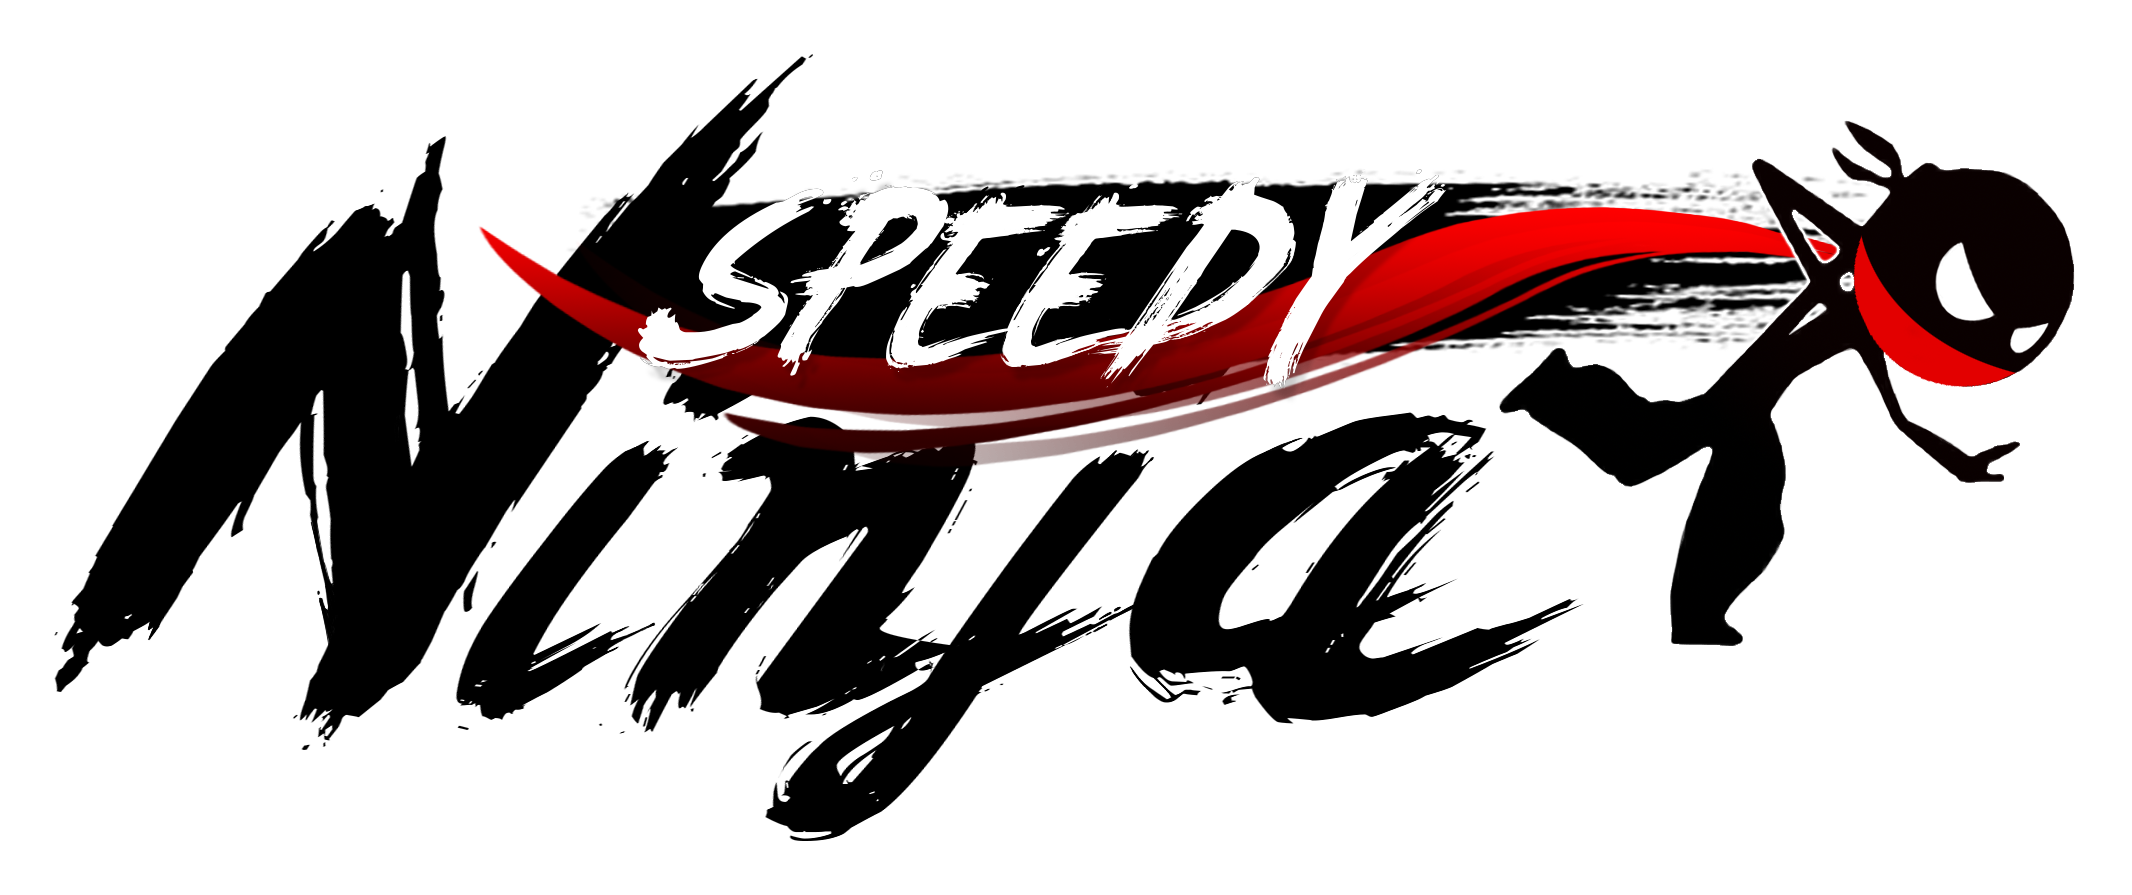 speedy ninja logo png #6200